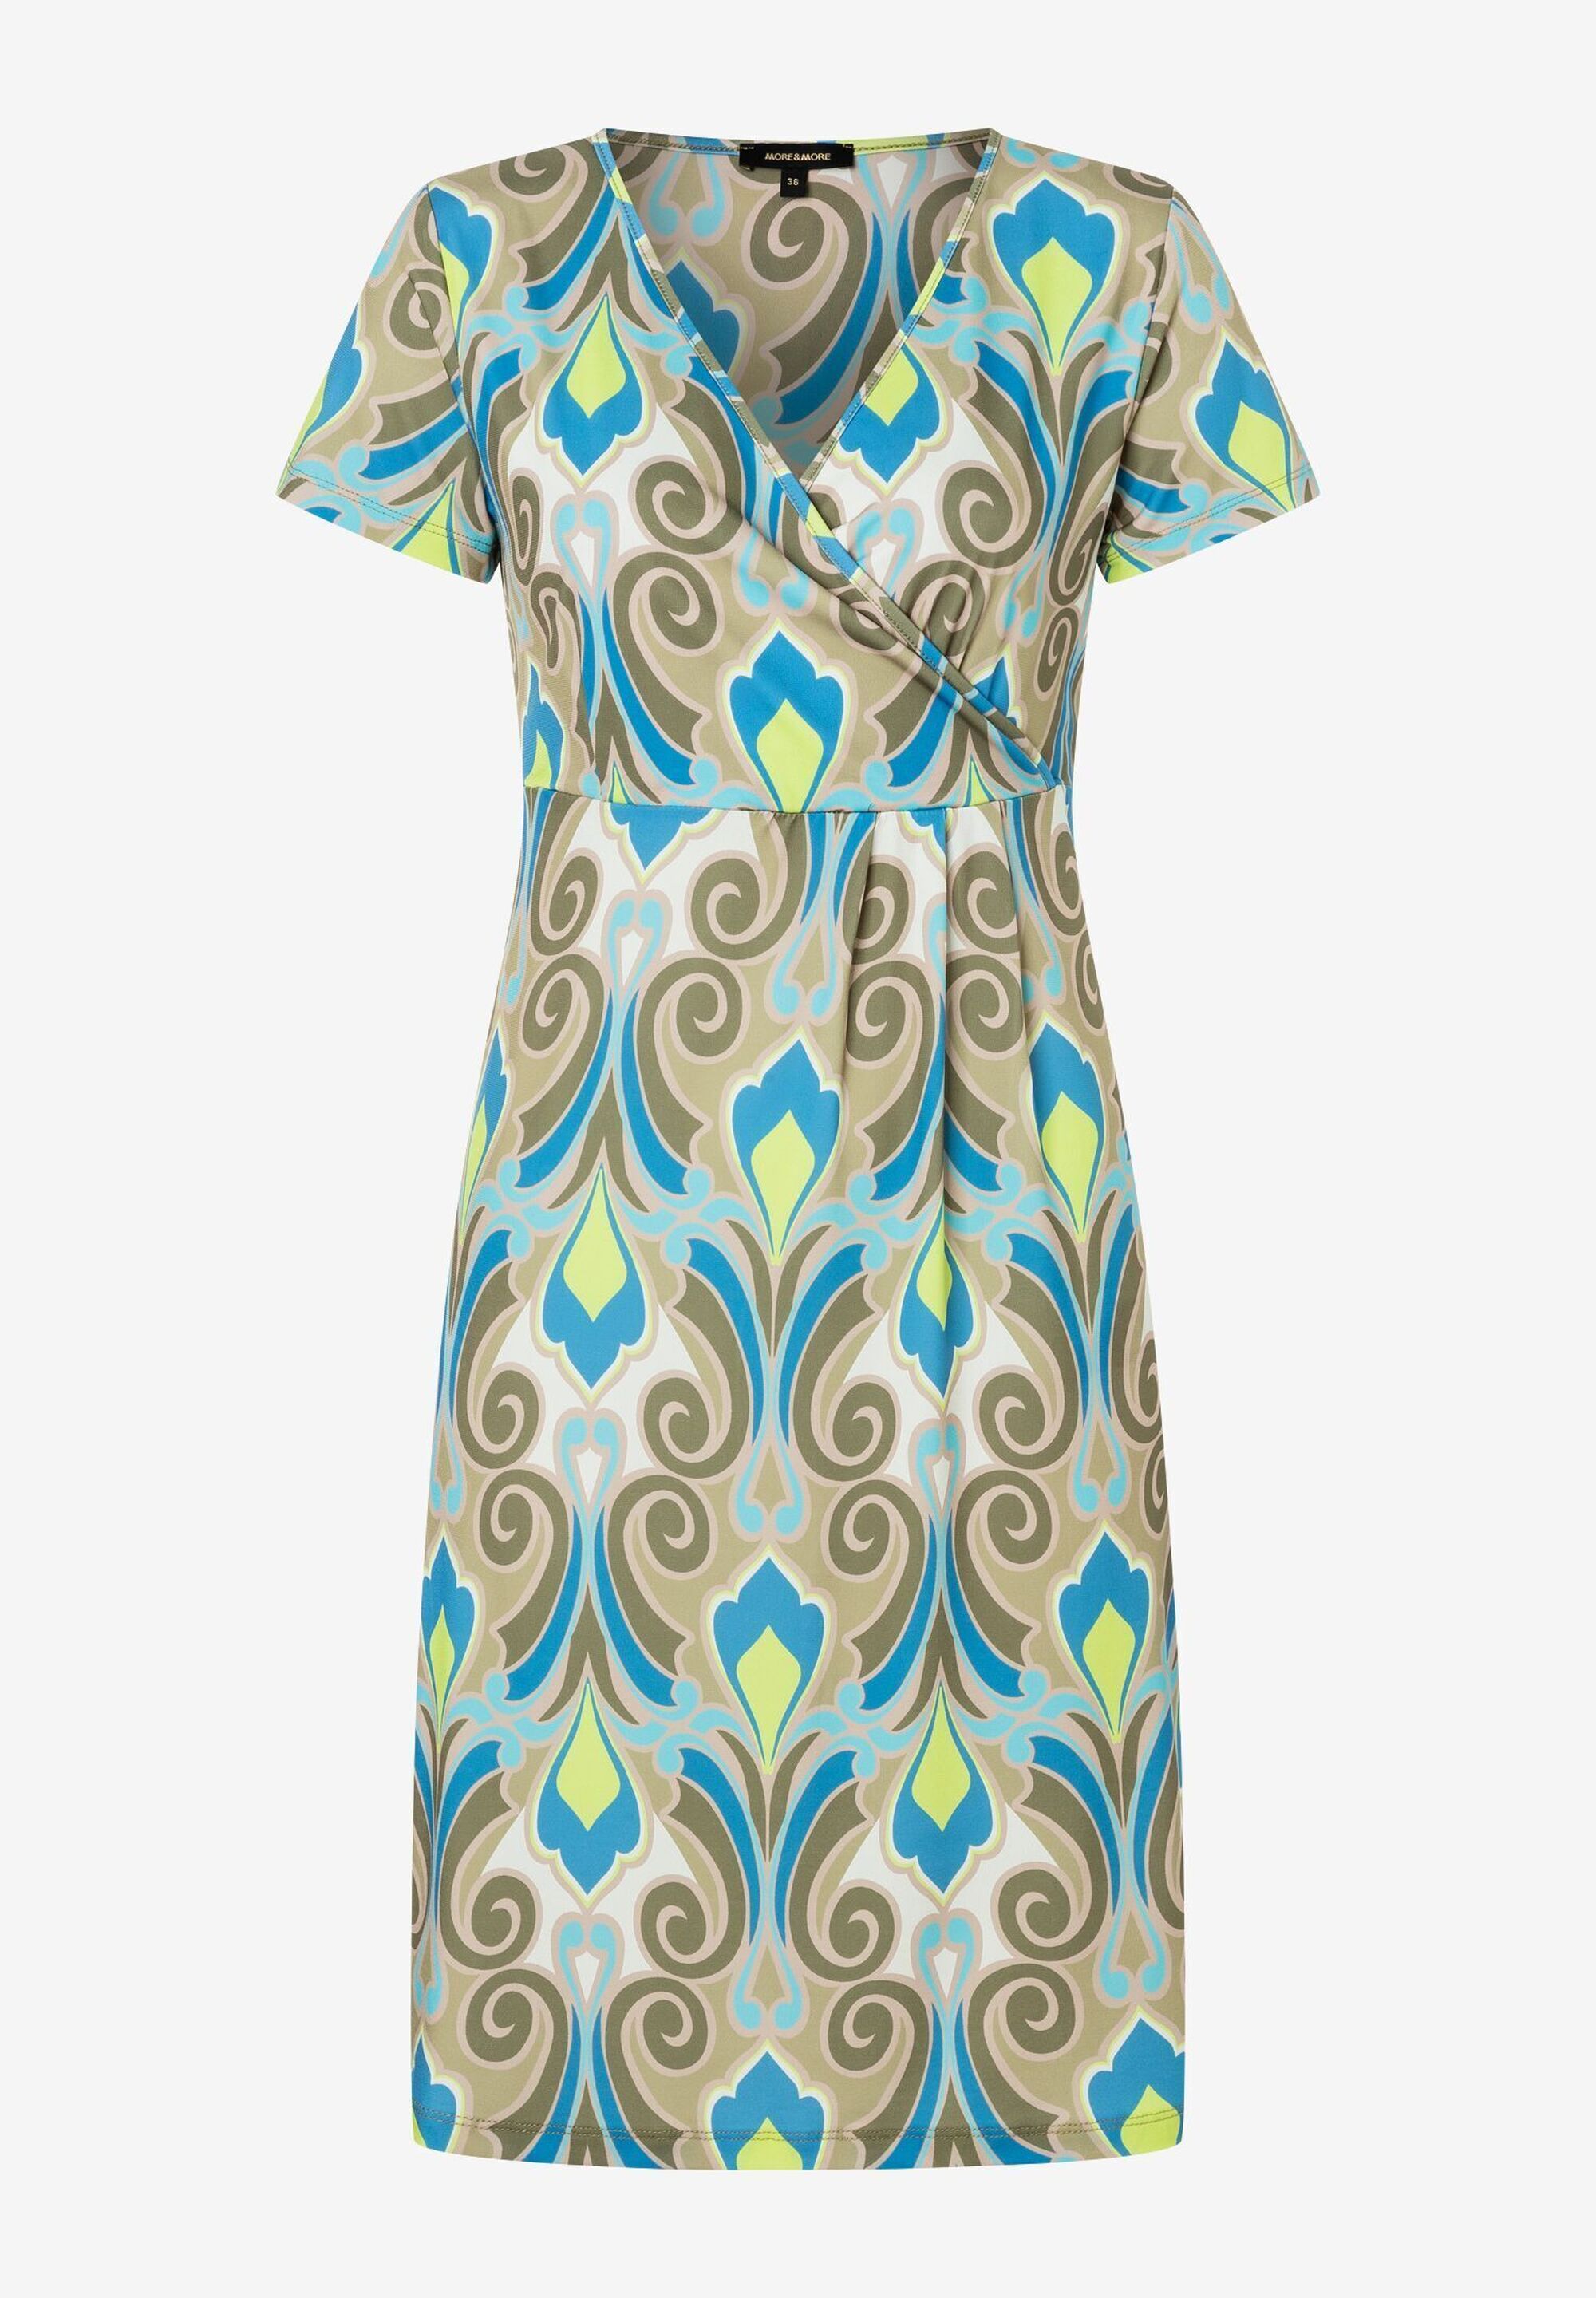 Jerseykleid, Ornament-Print, lime/khaki/blau | Der offizielle MORE & MORE  Onlineshop | Jerseykleider